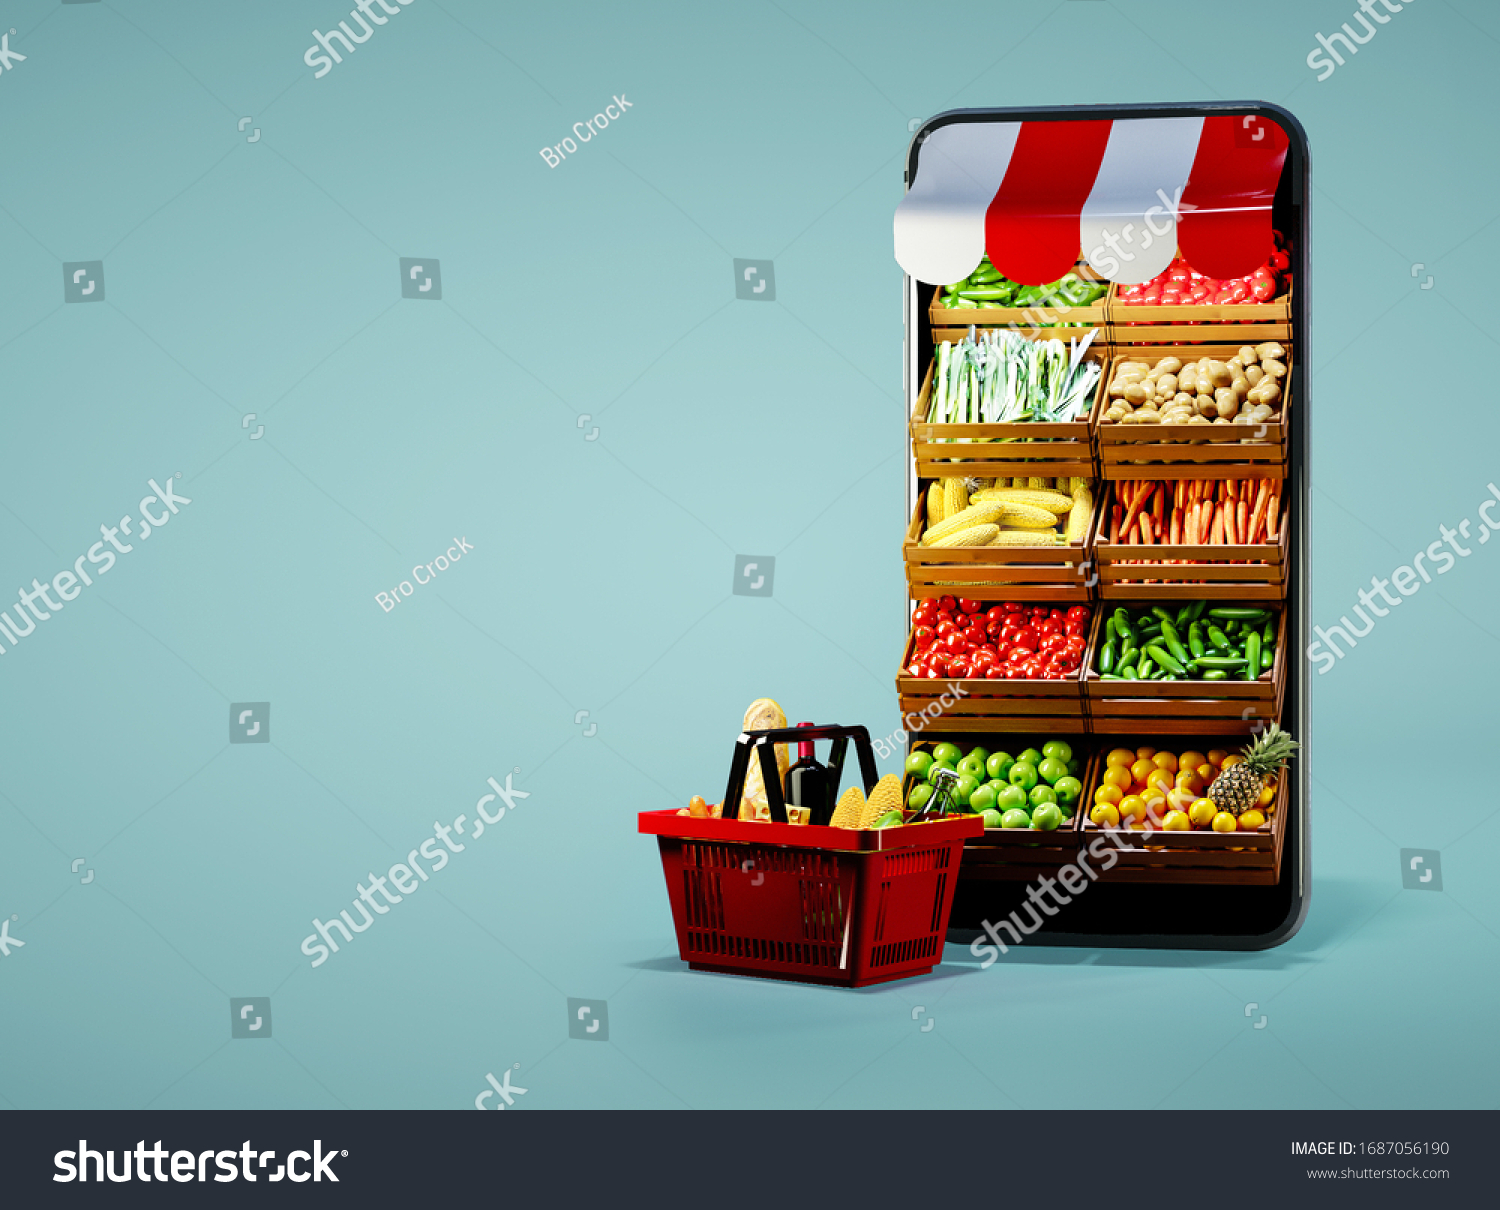 Service for delivery app. Food market in smartphone. Online shop. Food delivery background concept. Online shop in your smartphone. Shopping cart. #1687056190